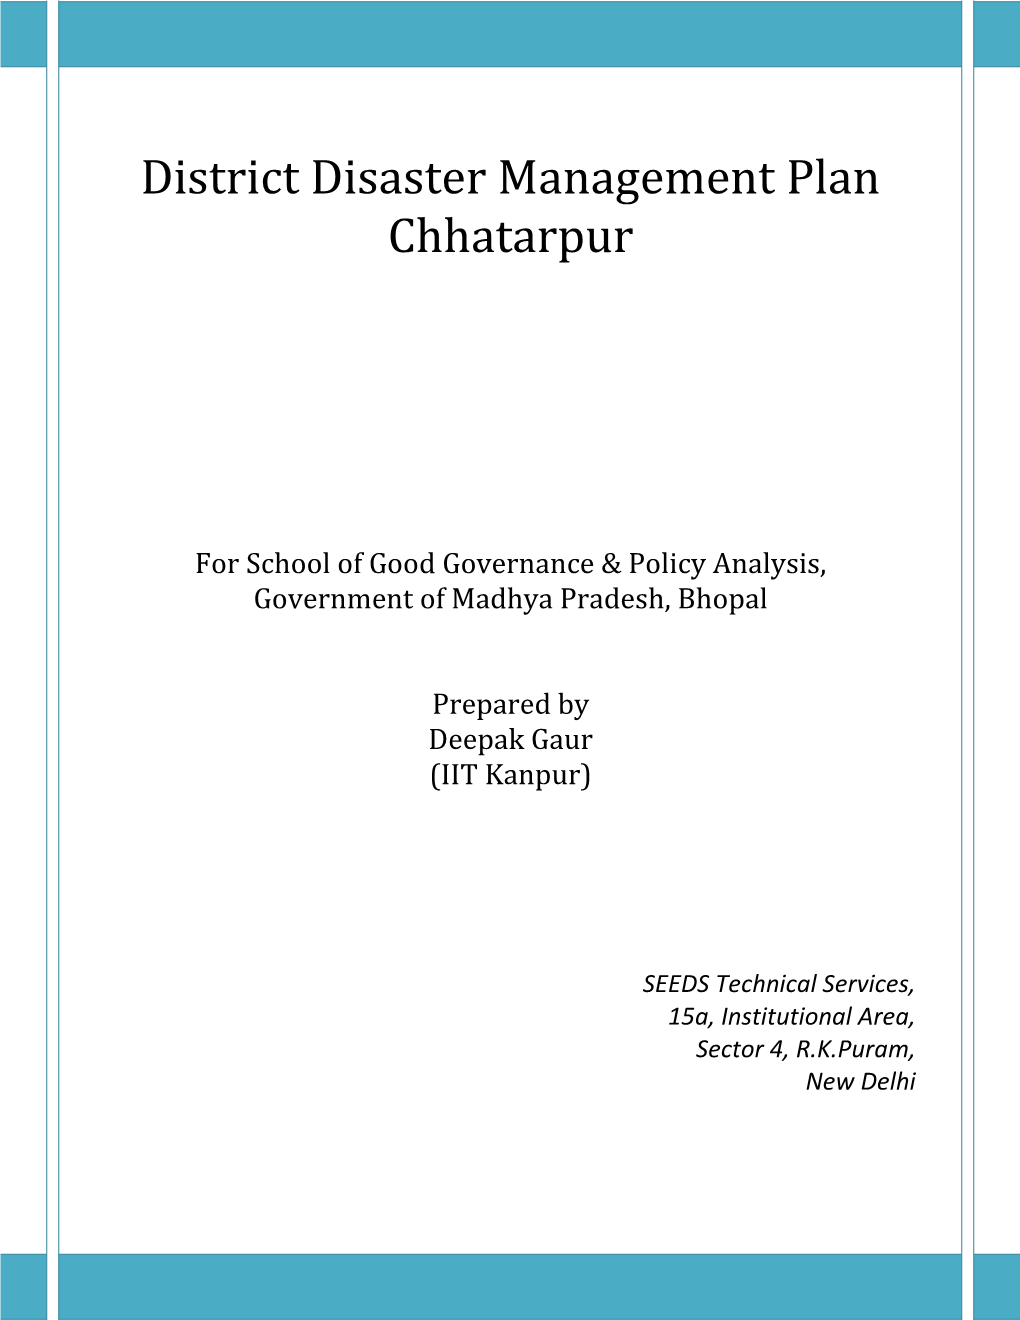 District Disaster Management Plan Chhatarpur